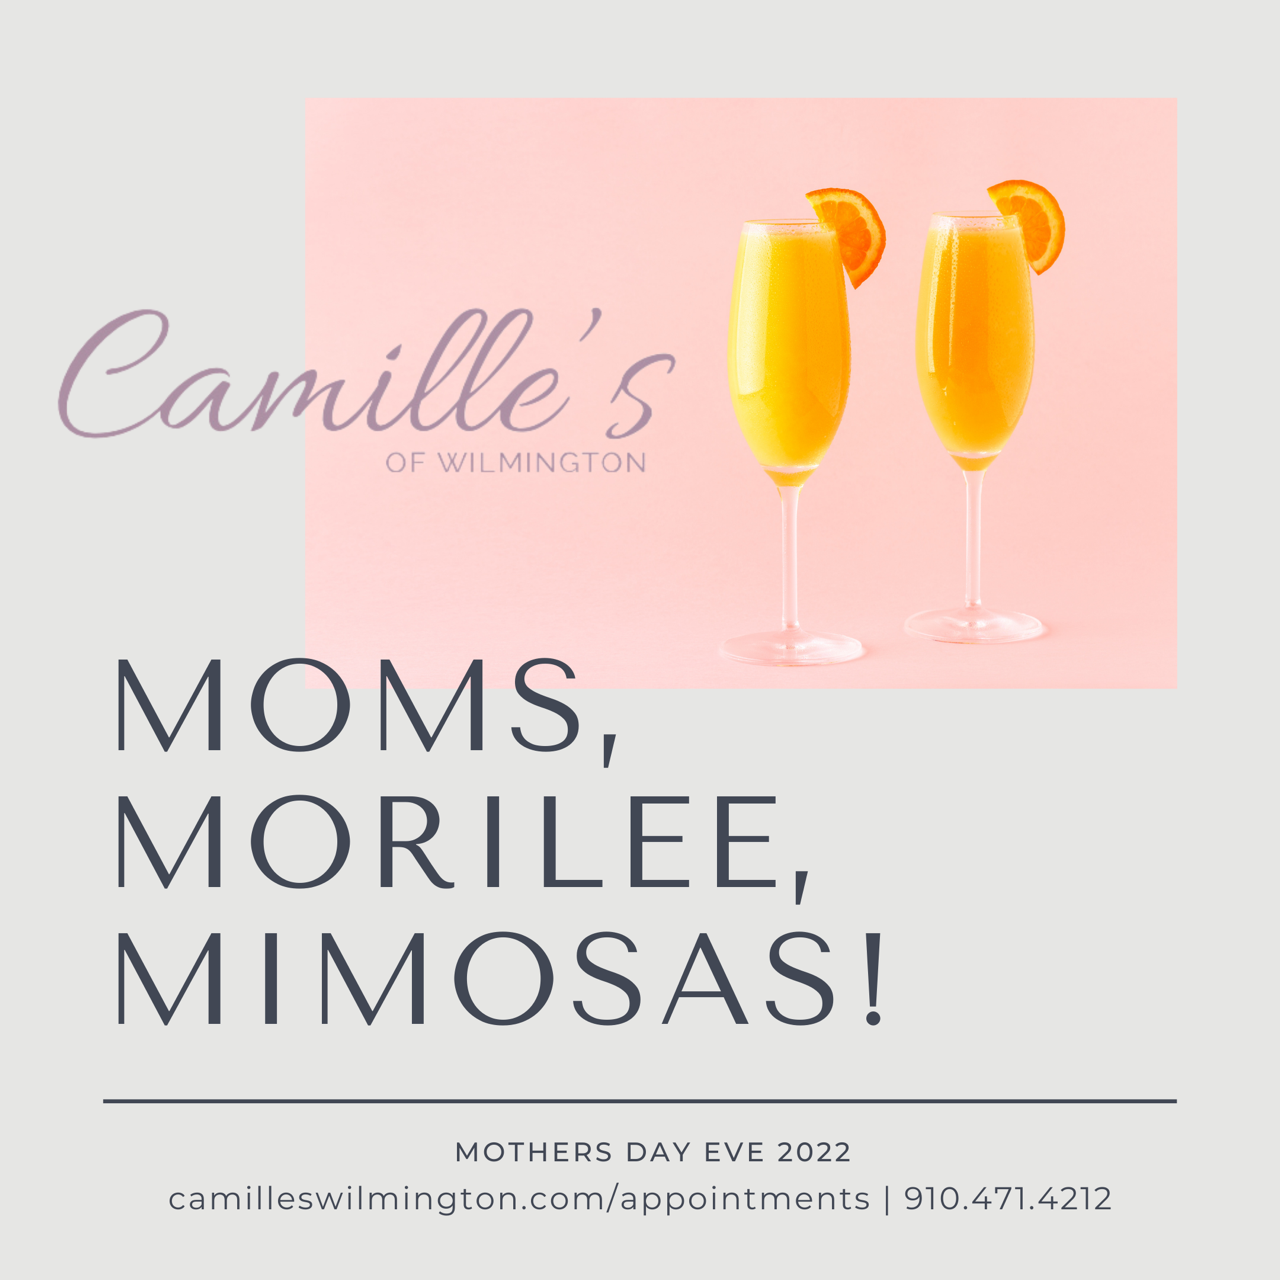 Moms, Morilee, Mimosas! Image